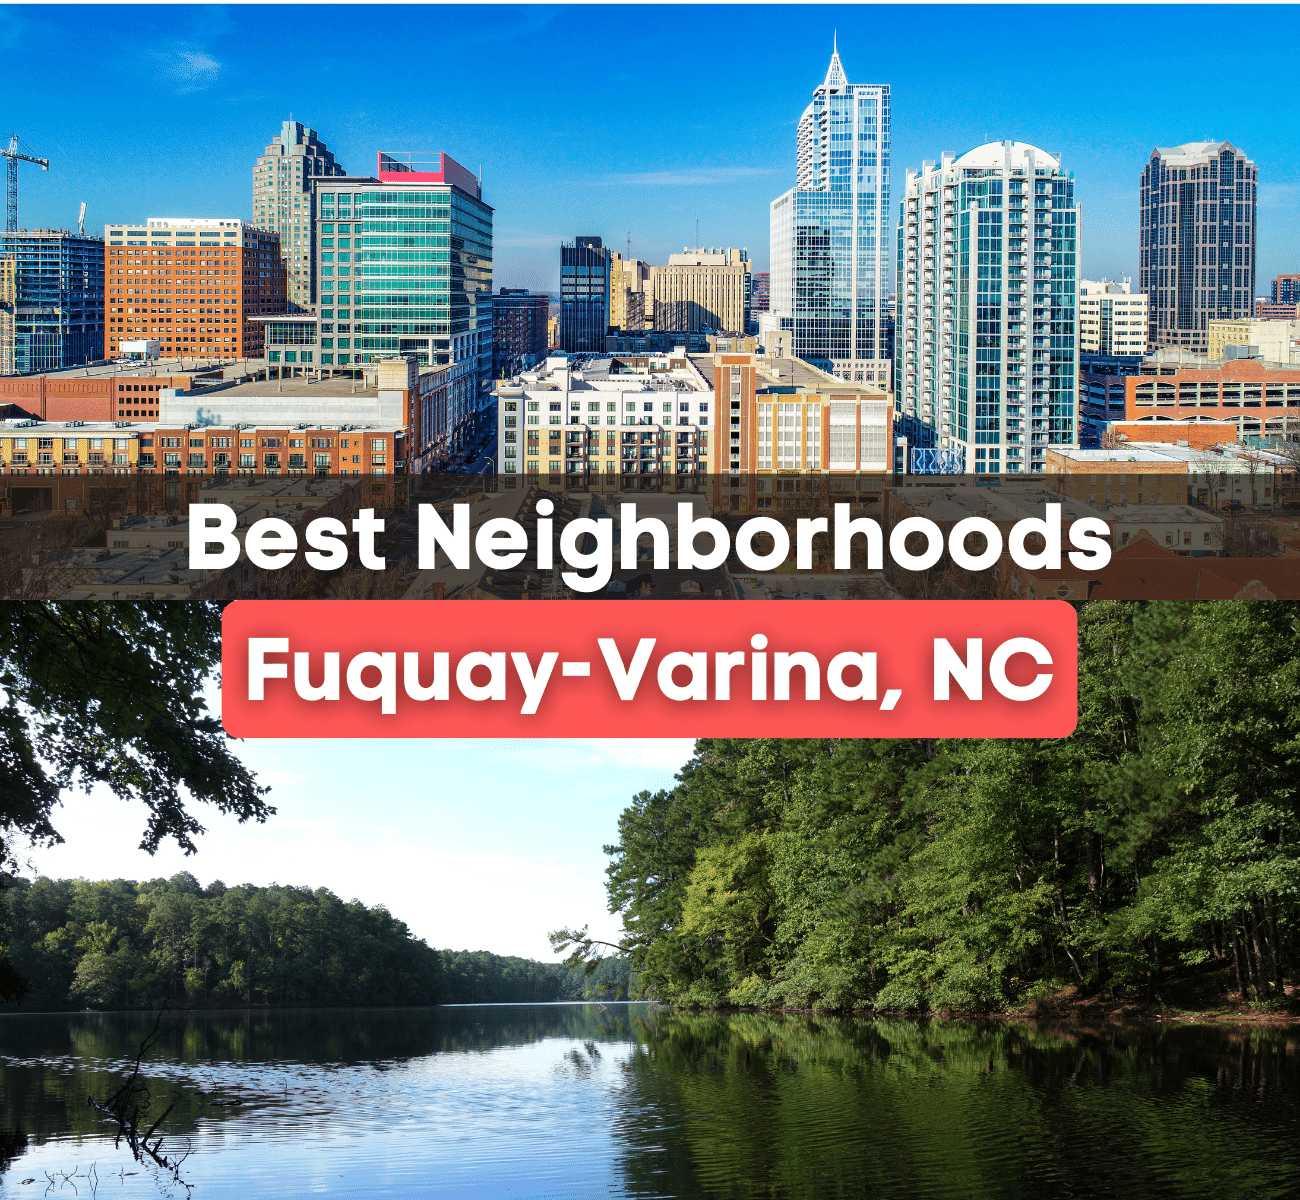 11 Best Neighborhoods in Fuquay-Varina, NC